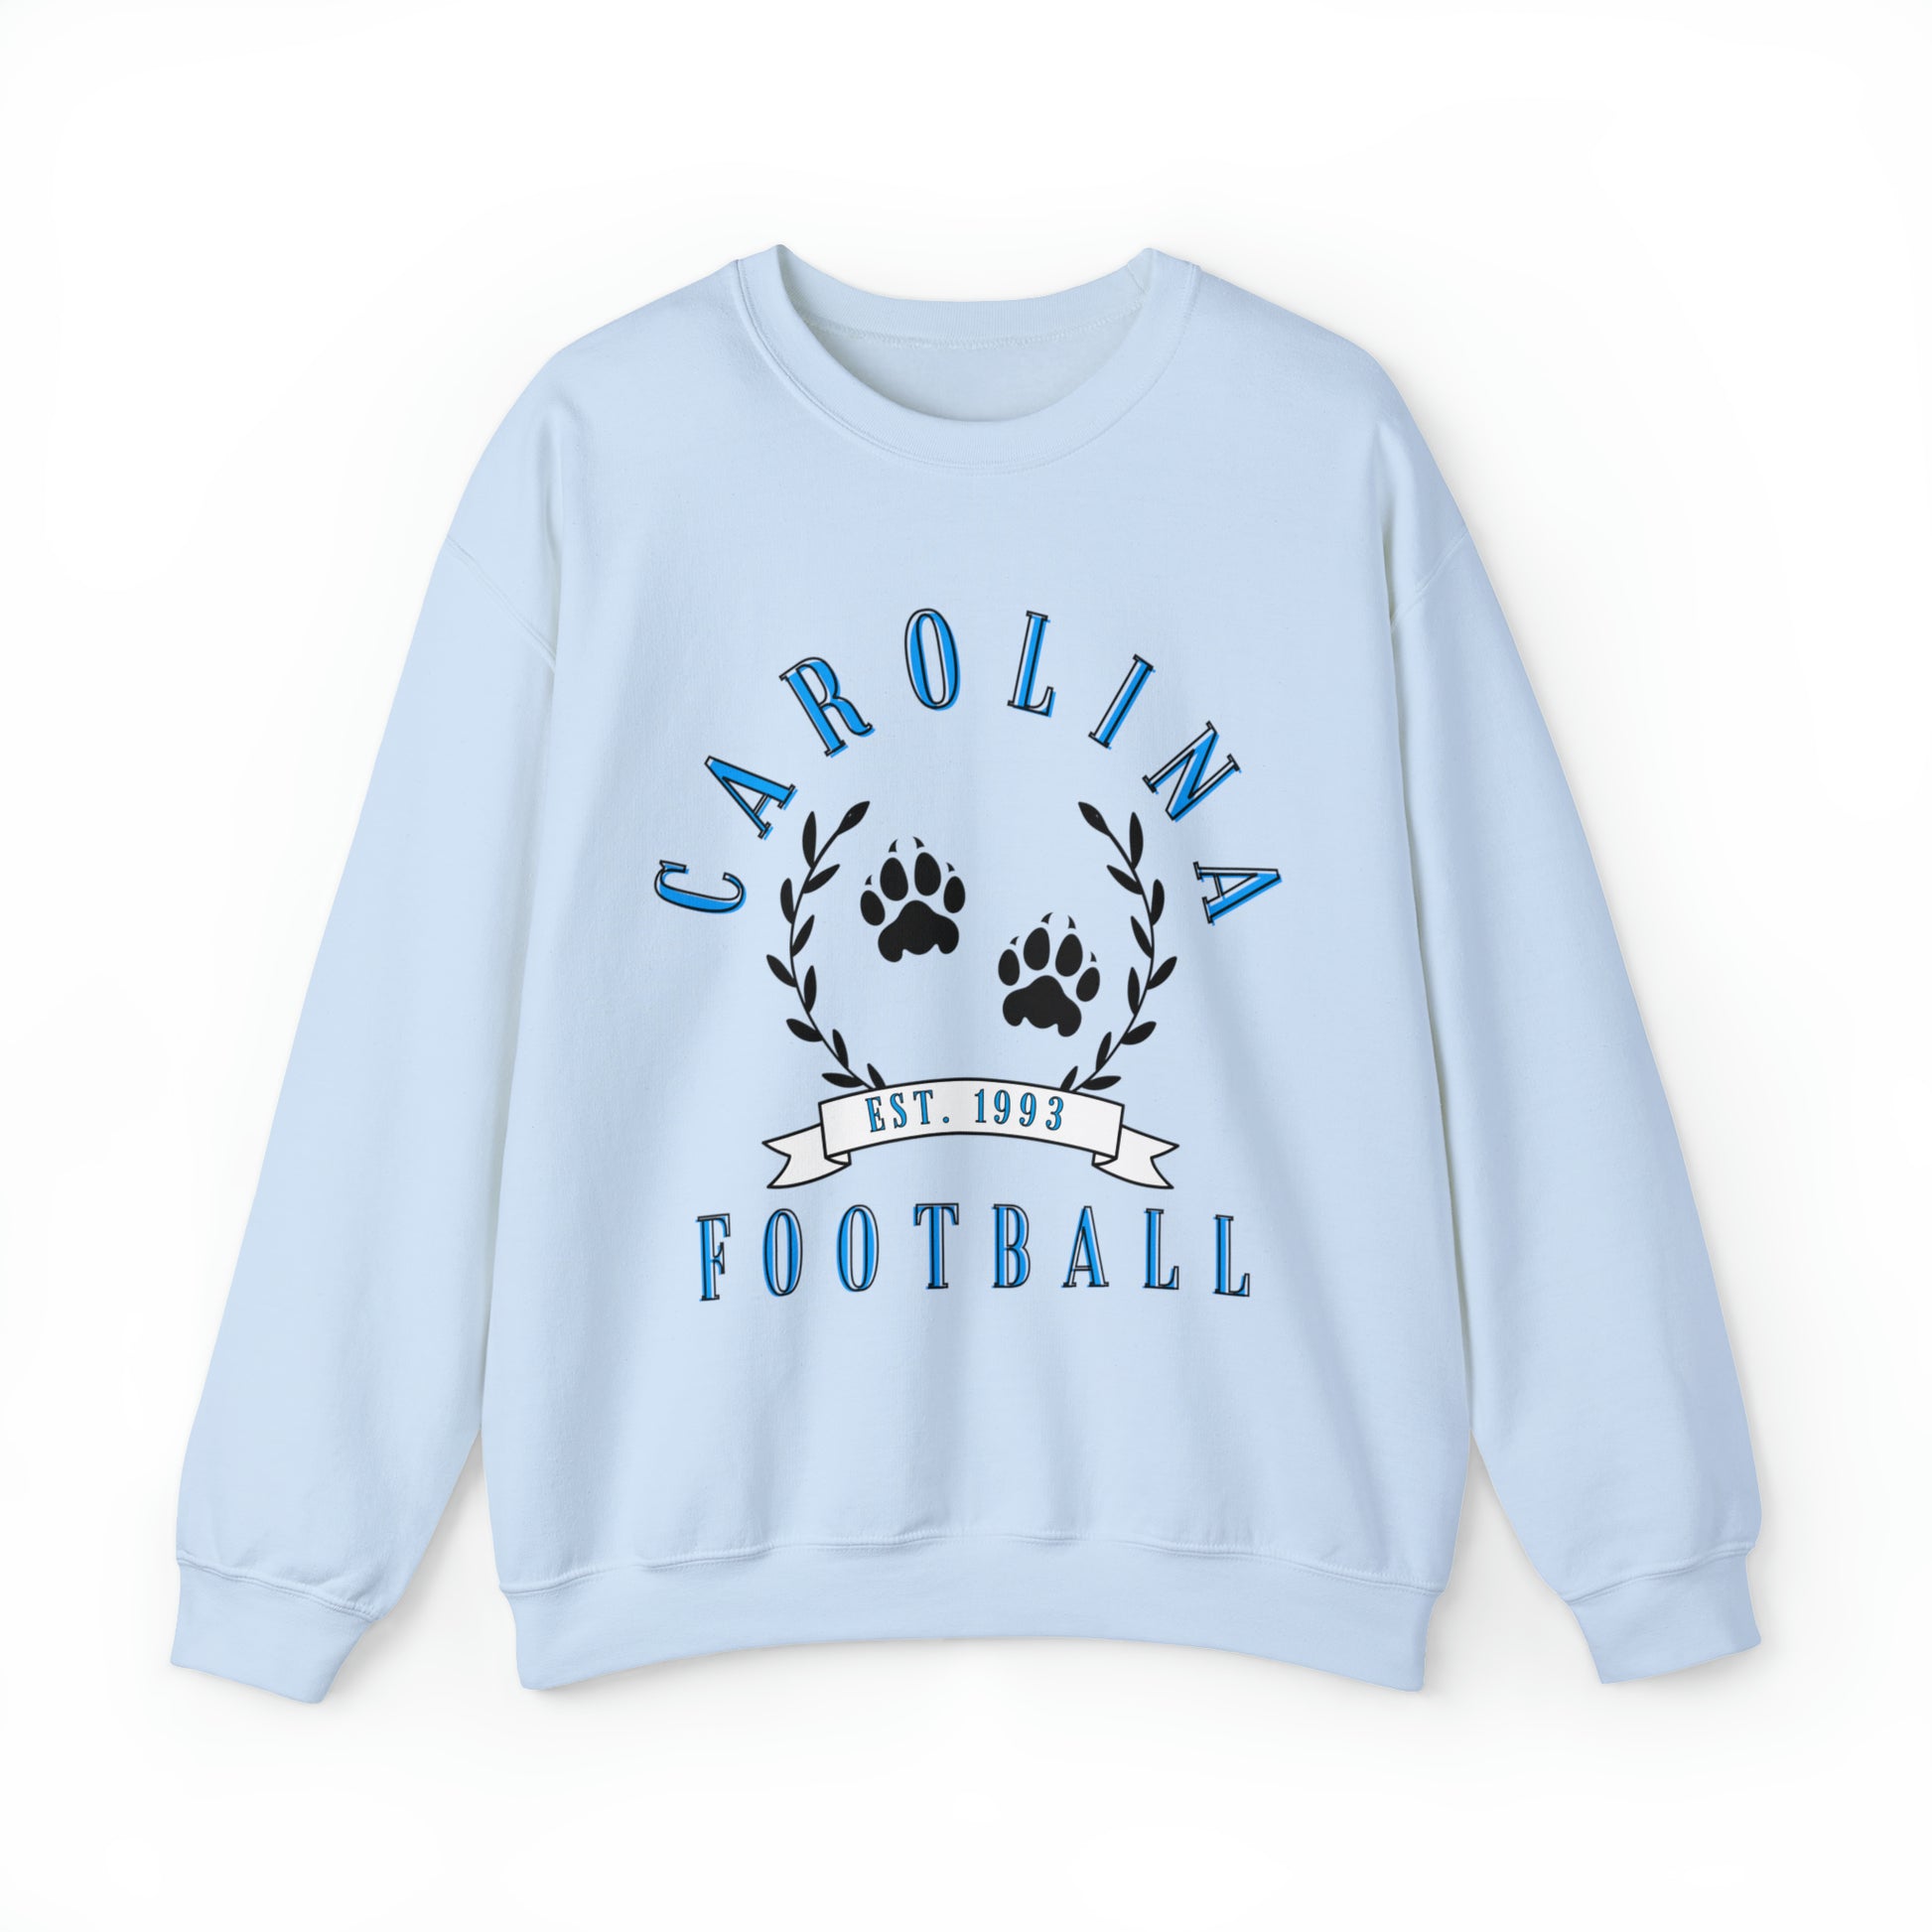 Vintage Carolina Panthers Crewneck Sweatshirt - Retro NFL Football Hoodie Apparel - Vintage Men's and Women's - Design 3 Light Blue